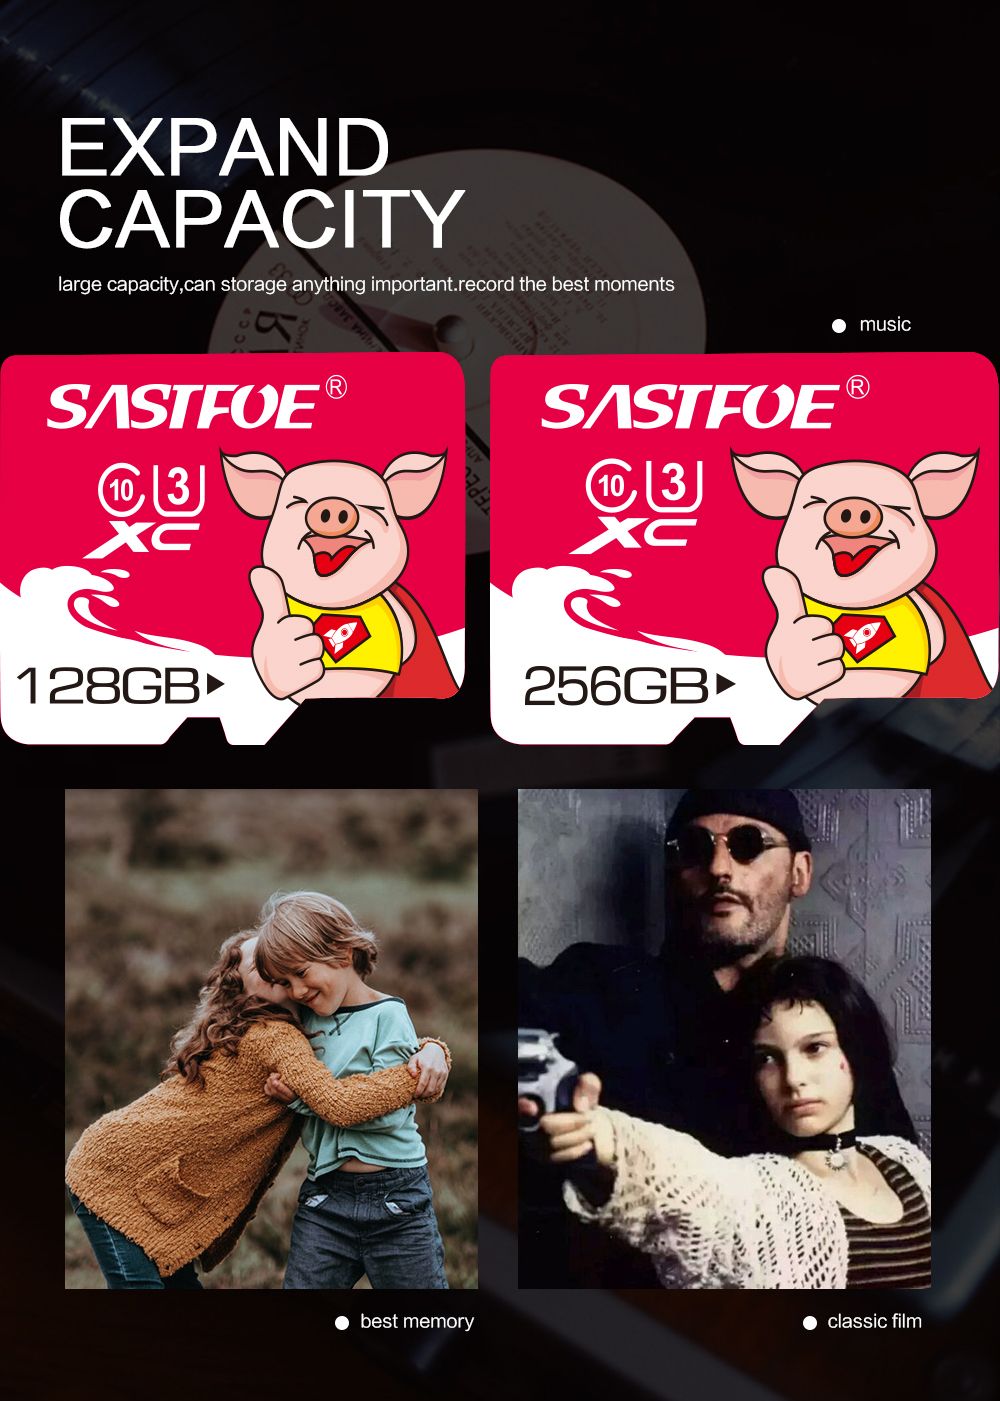 SASTFOE-Year-of-the-Pig-Limited-Edition-U3-128GB-TF-Memory-Card-1582019